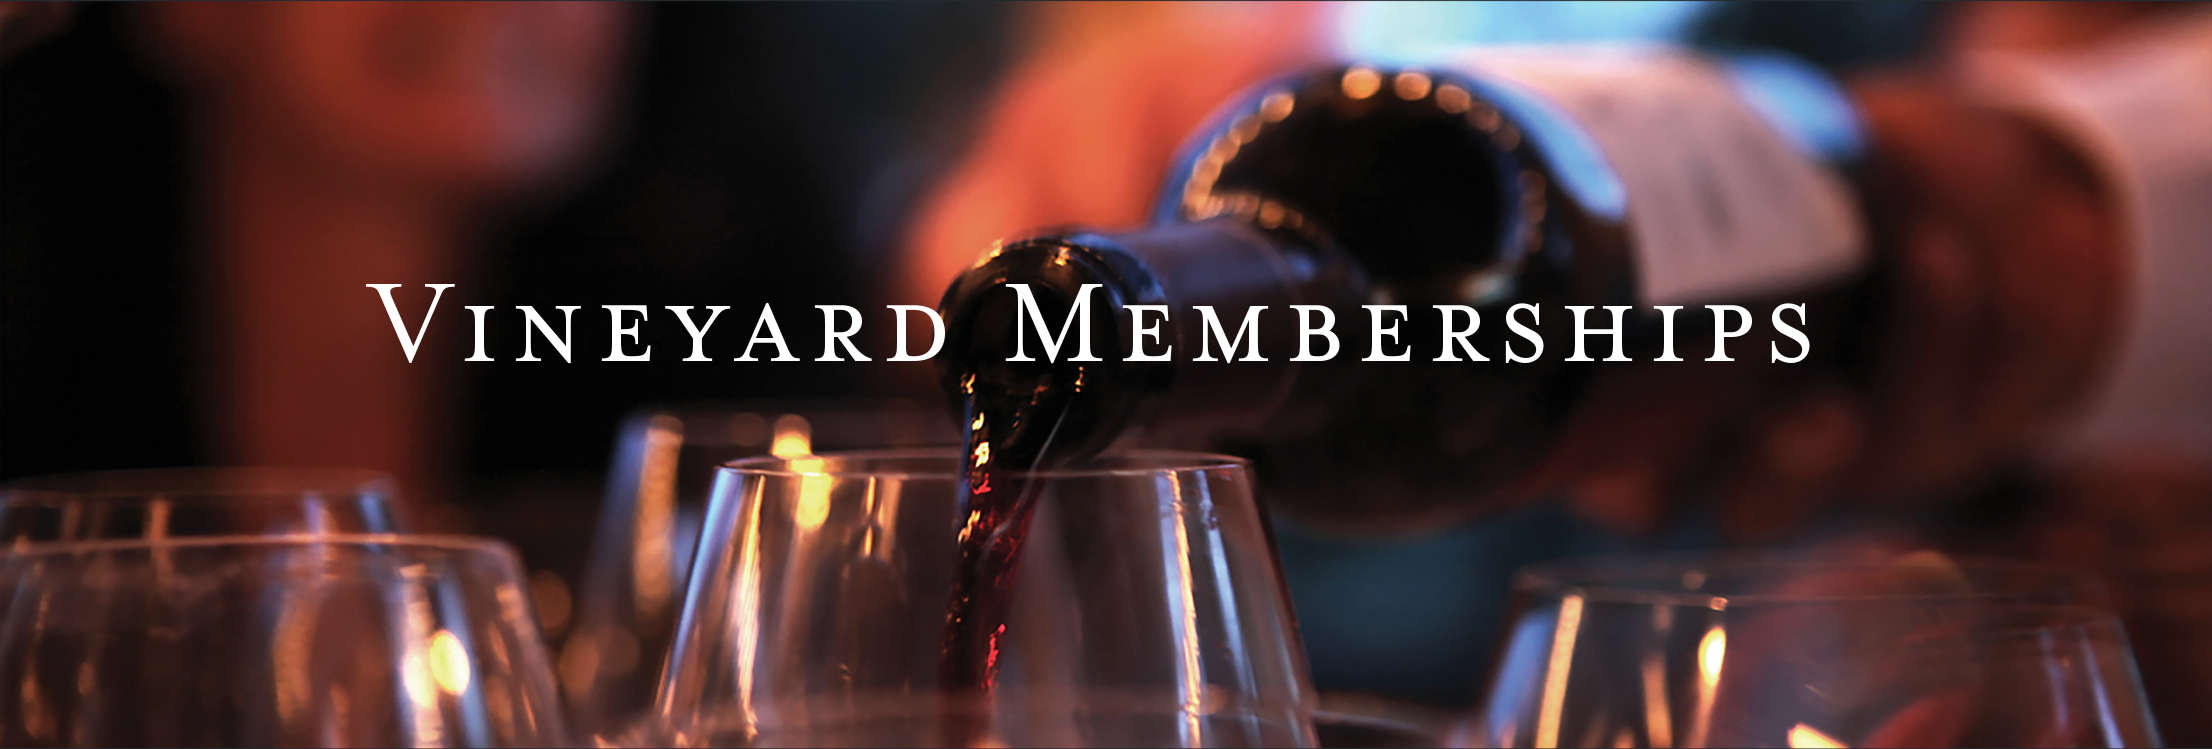 Vineyard Memberships